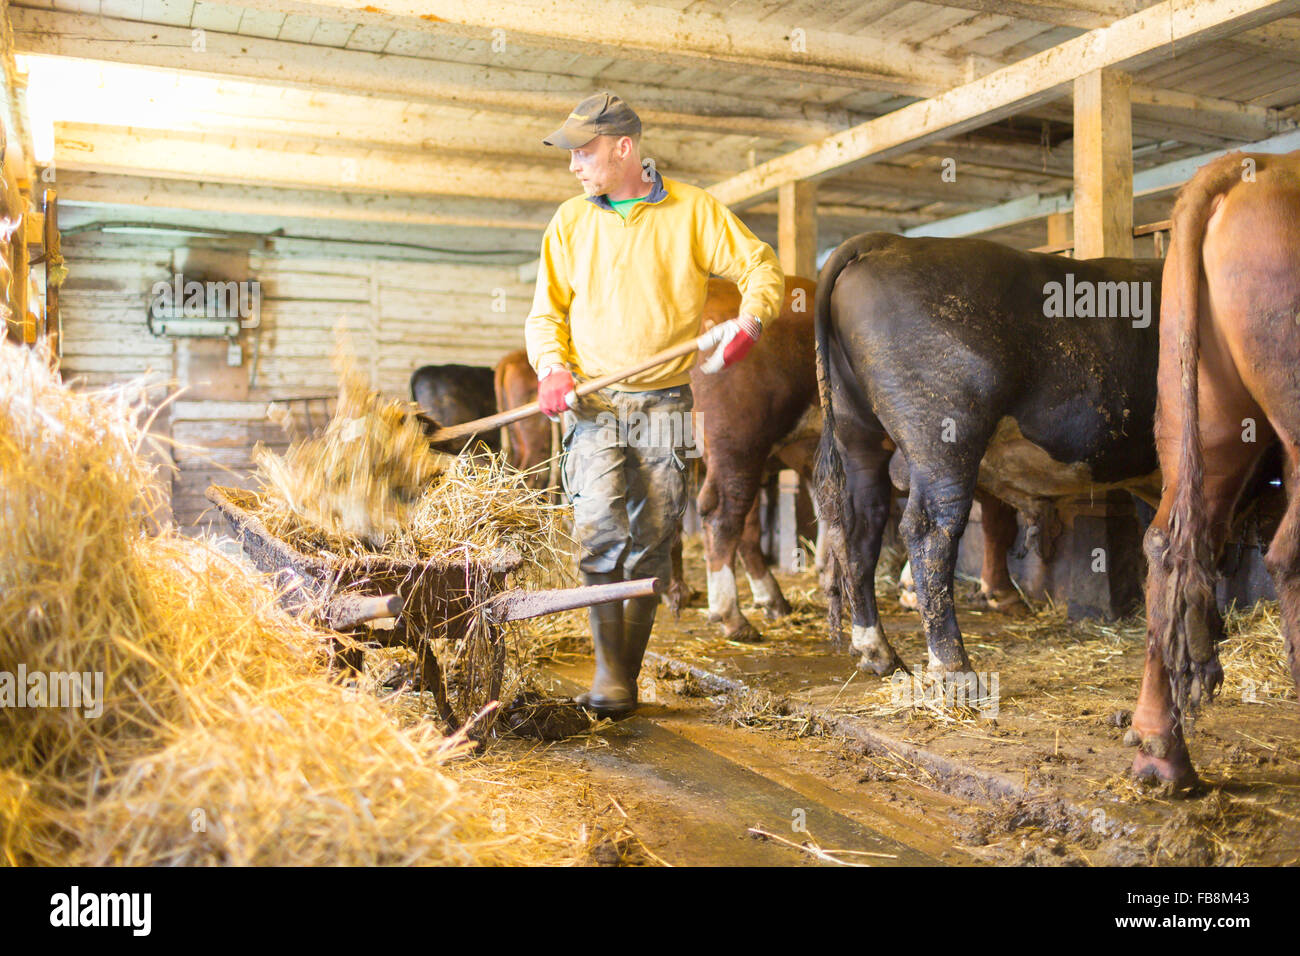 Sweden, Ostergotland, Grytgol, Farmer working in barn Stock Photo